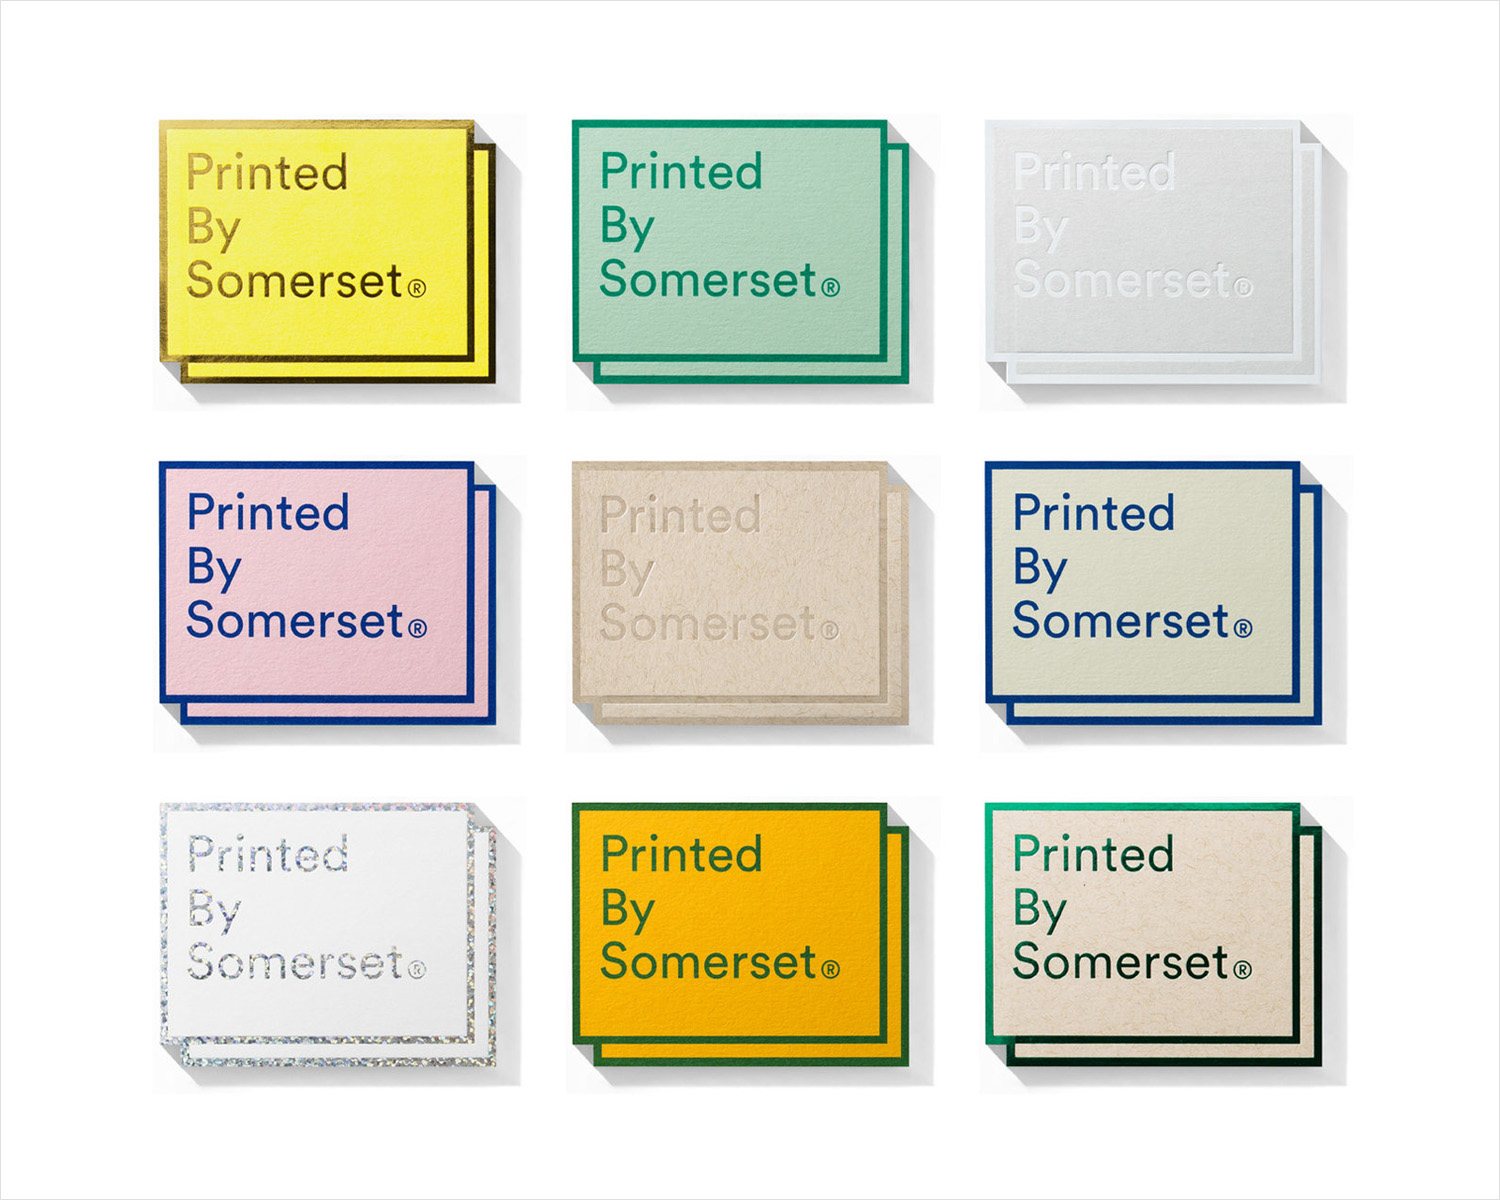 Logo, stationery, print and website by Leo Burnett Toronto for print production studio Somerset